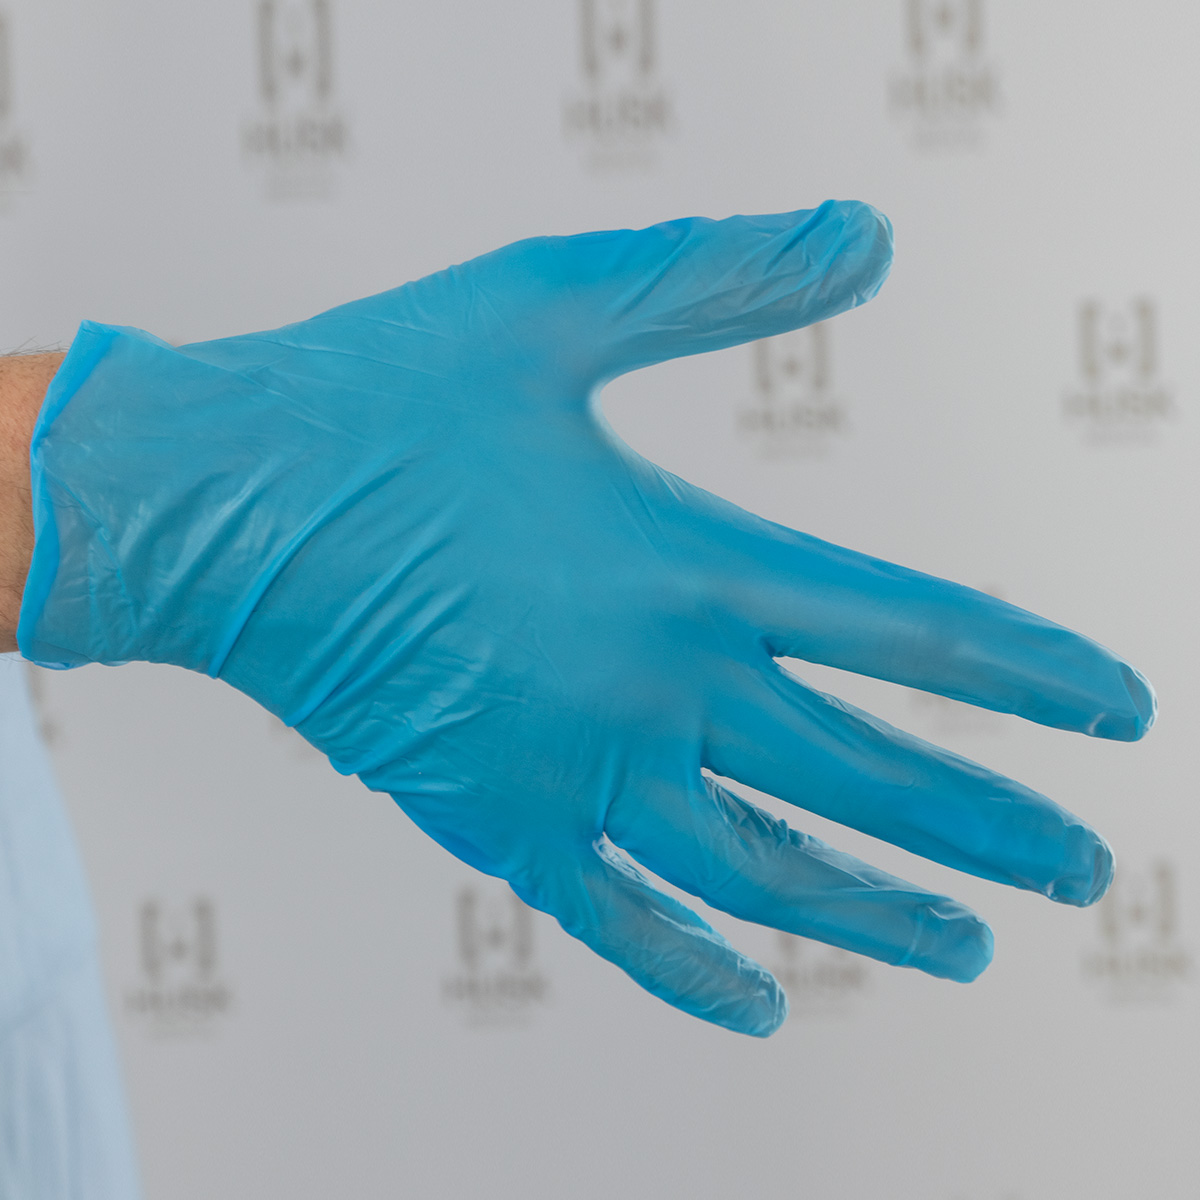 efterklang Hub Tradition Medical examination gloves | Vinyl/nitril blend (VITRILE) | Non-powdered